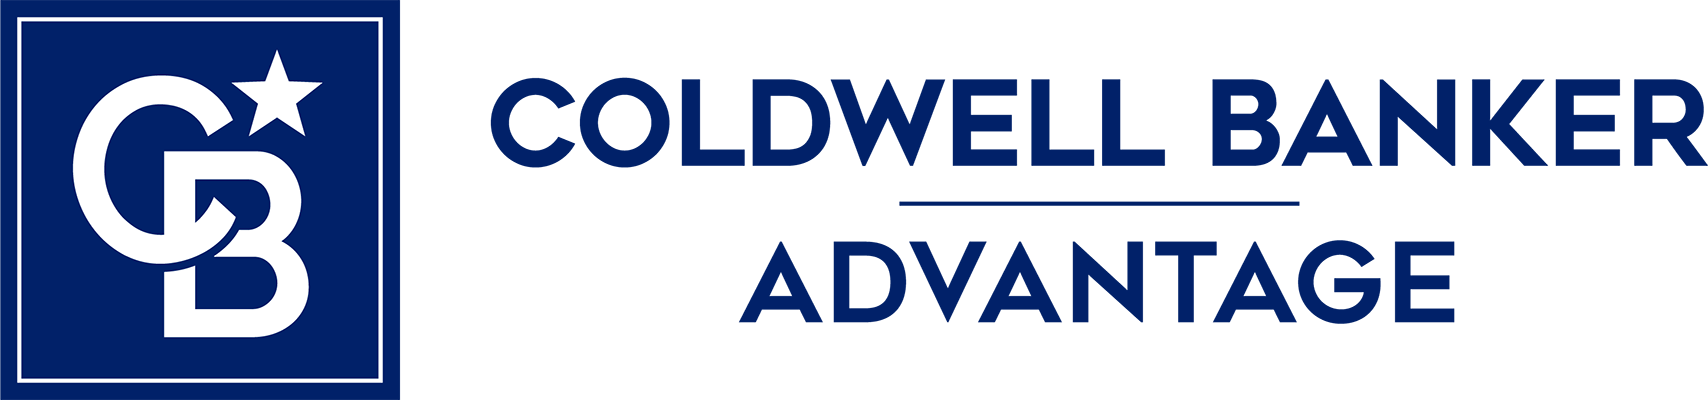 Amy Hickey - Coldwell Banker Advantage Logo